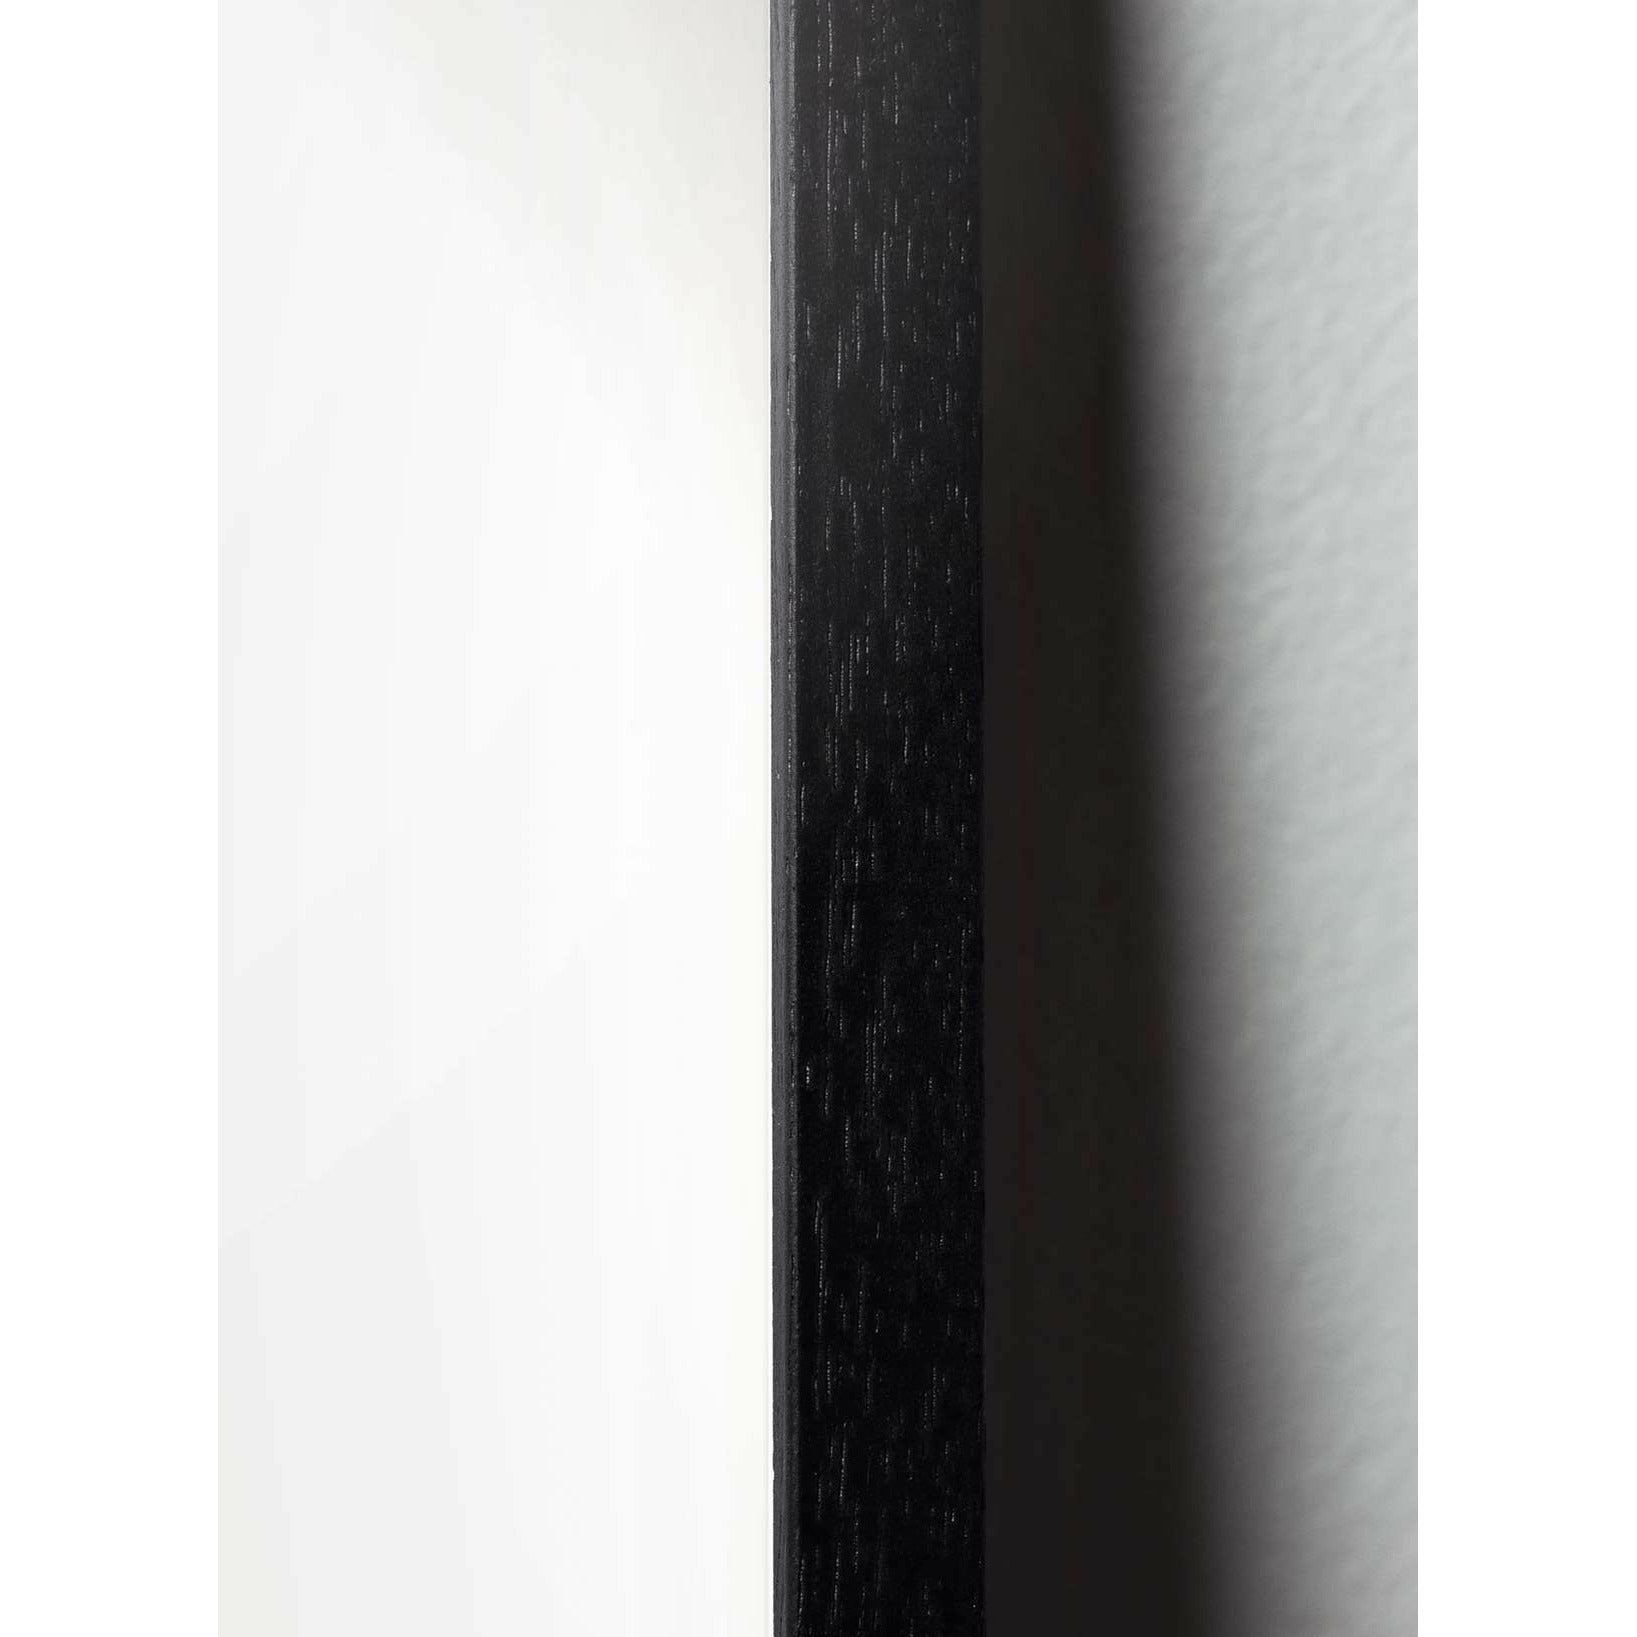 Brainchild Blumentopf Design Icon Poster, Rahmen aus schwarz lackiertem Holz 70 X100 Cm, grau